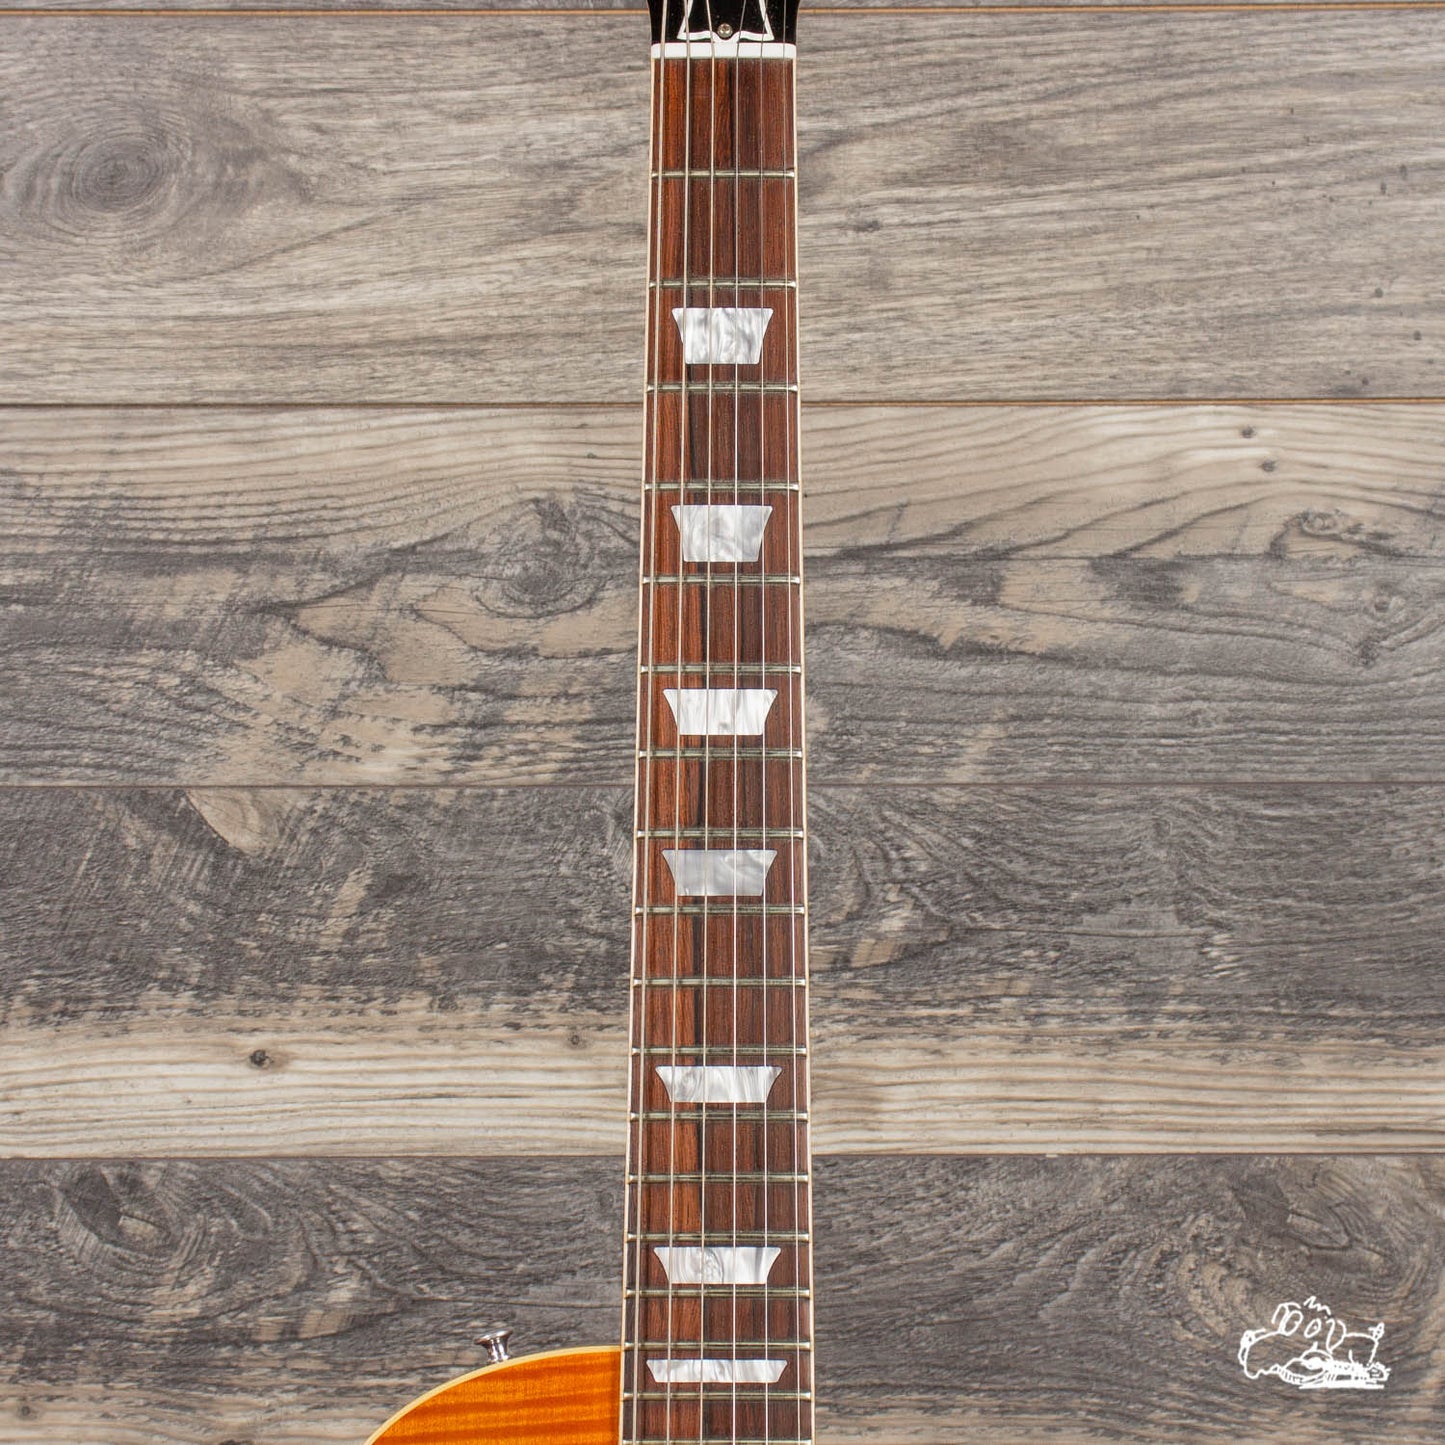 2001 Gibson R8